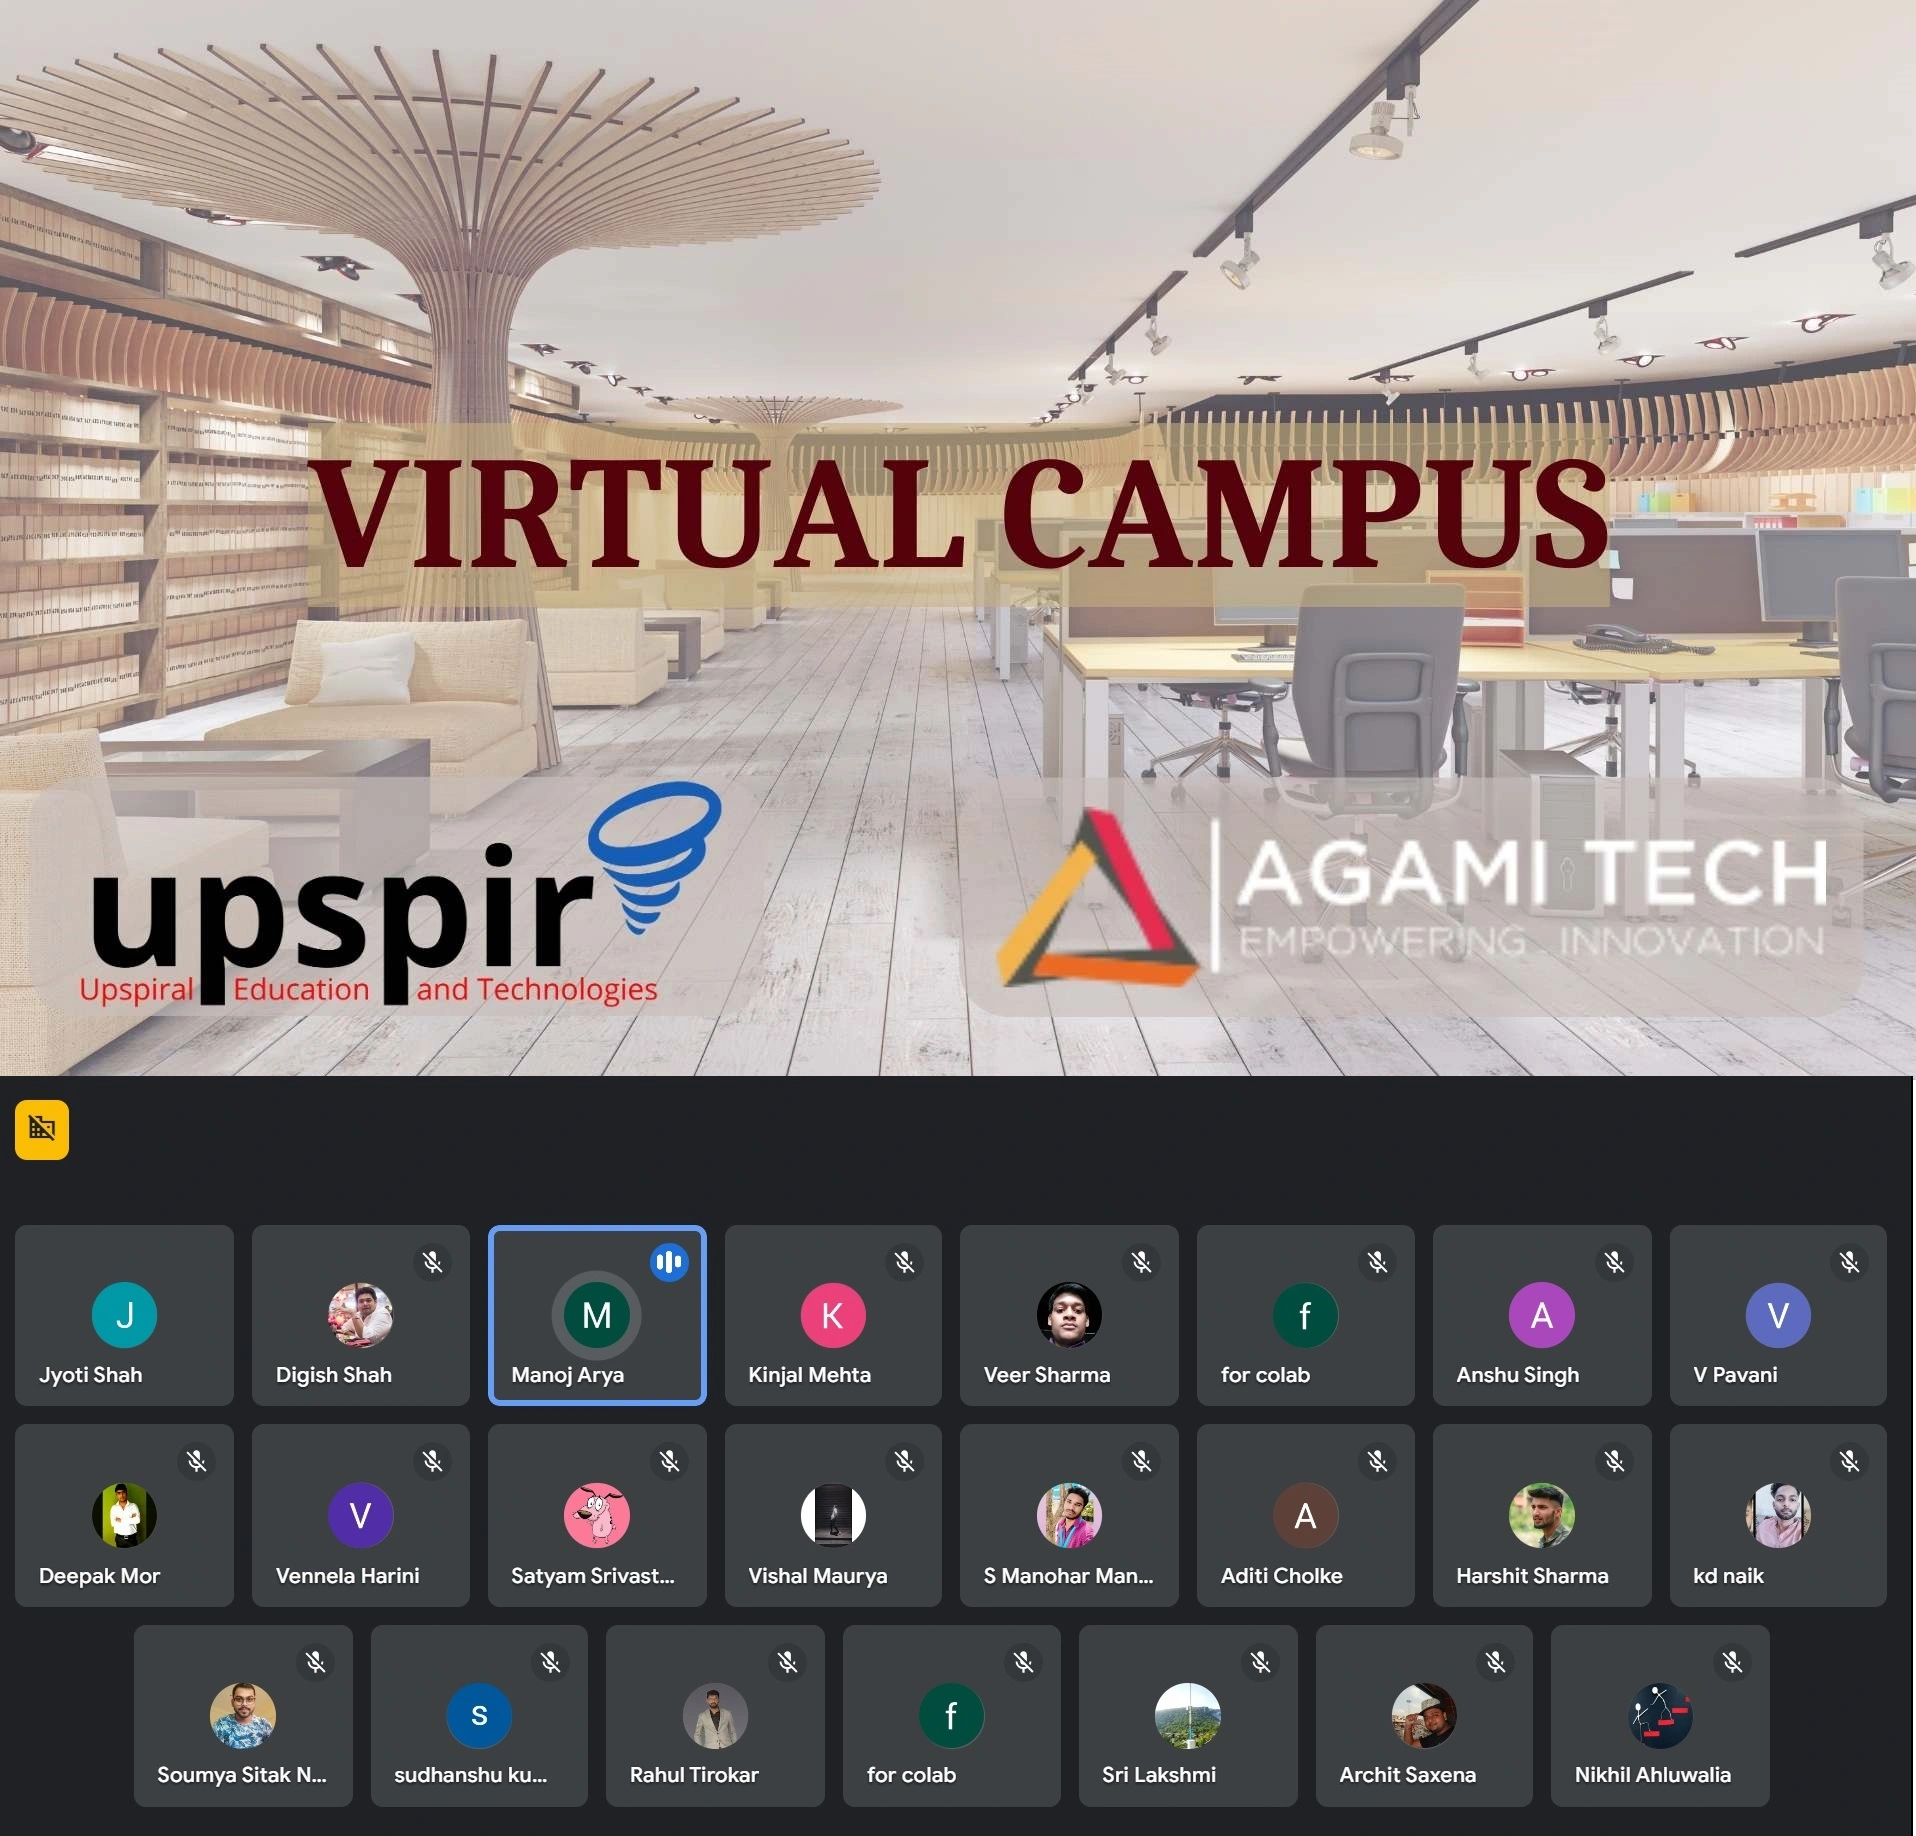 virtual campus agami tech II